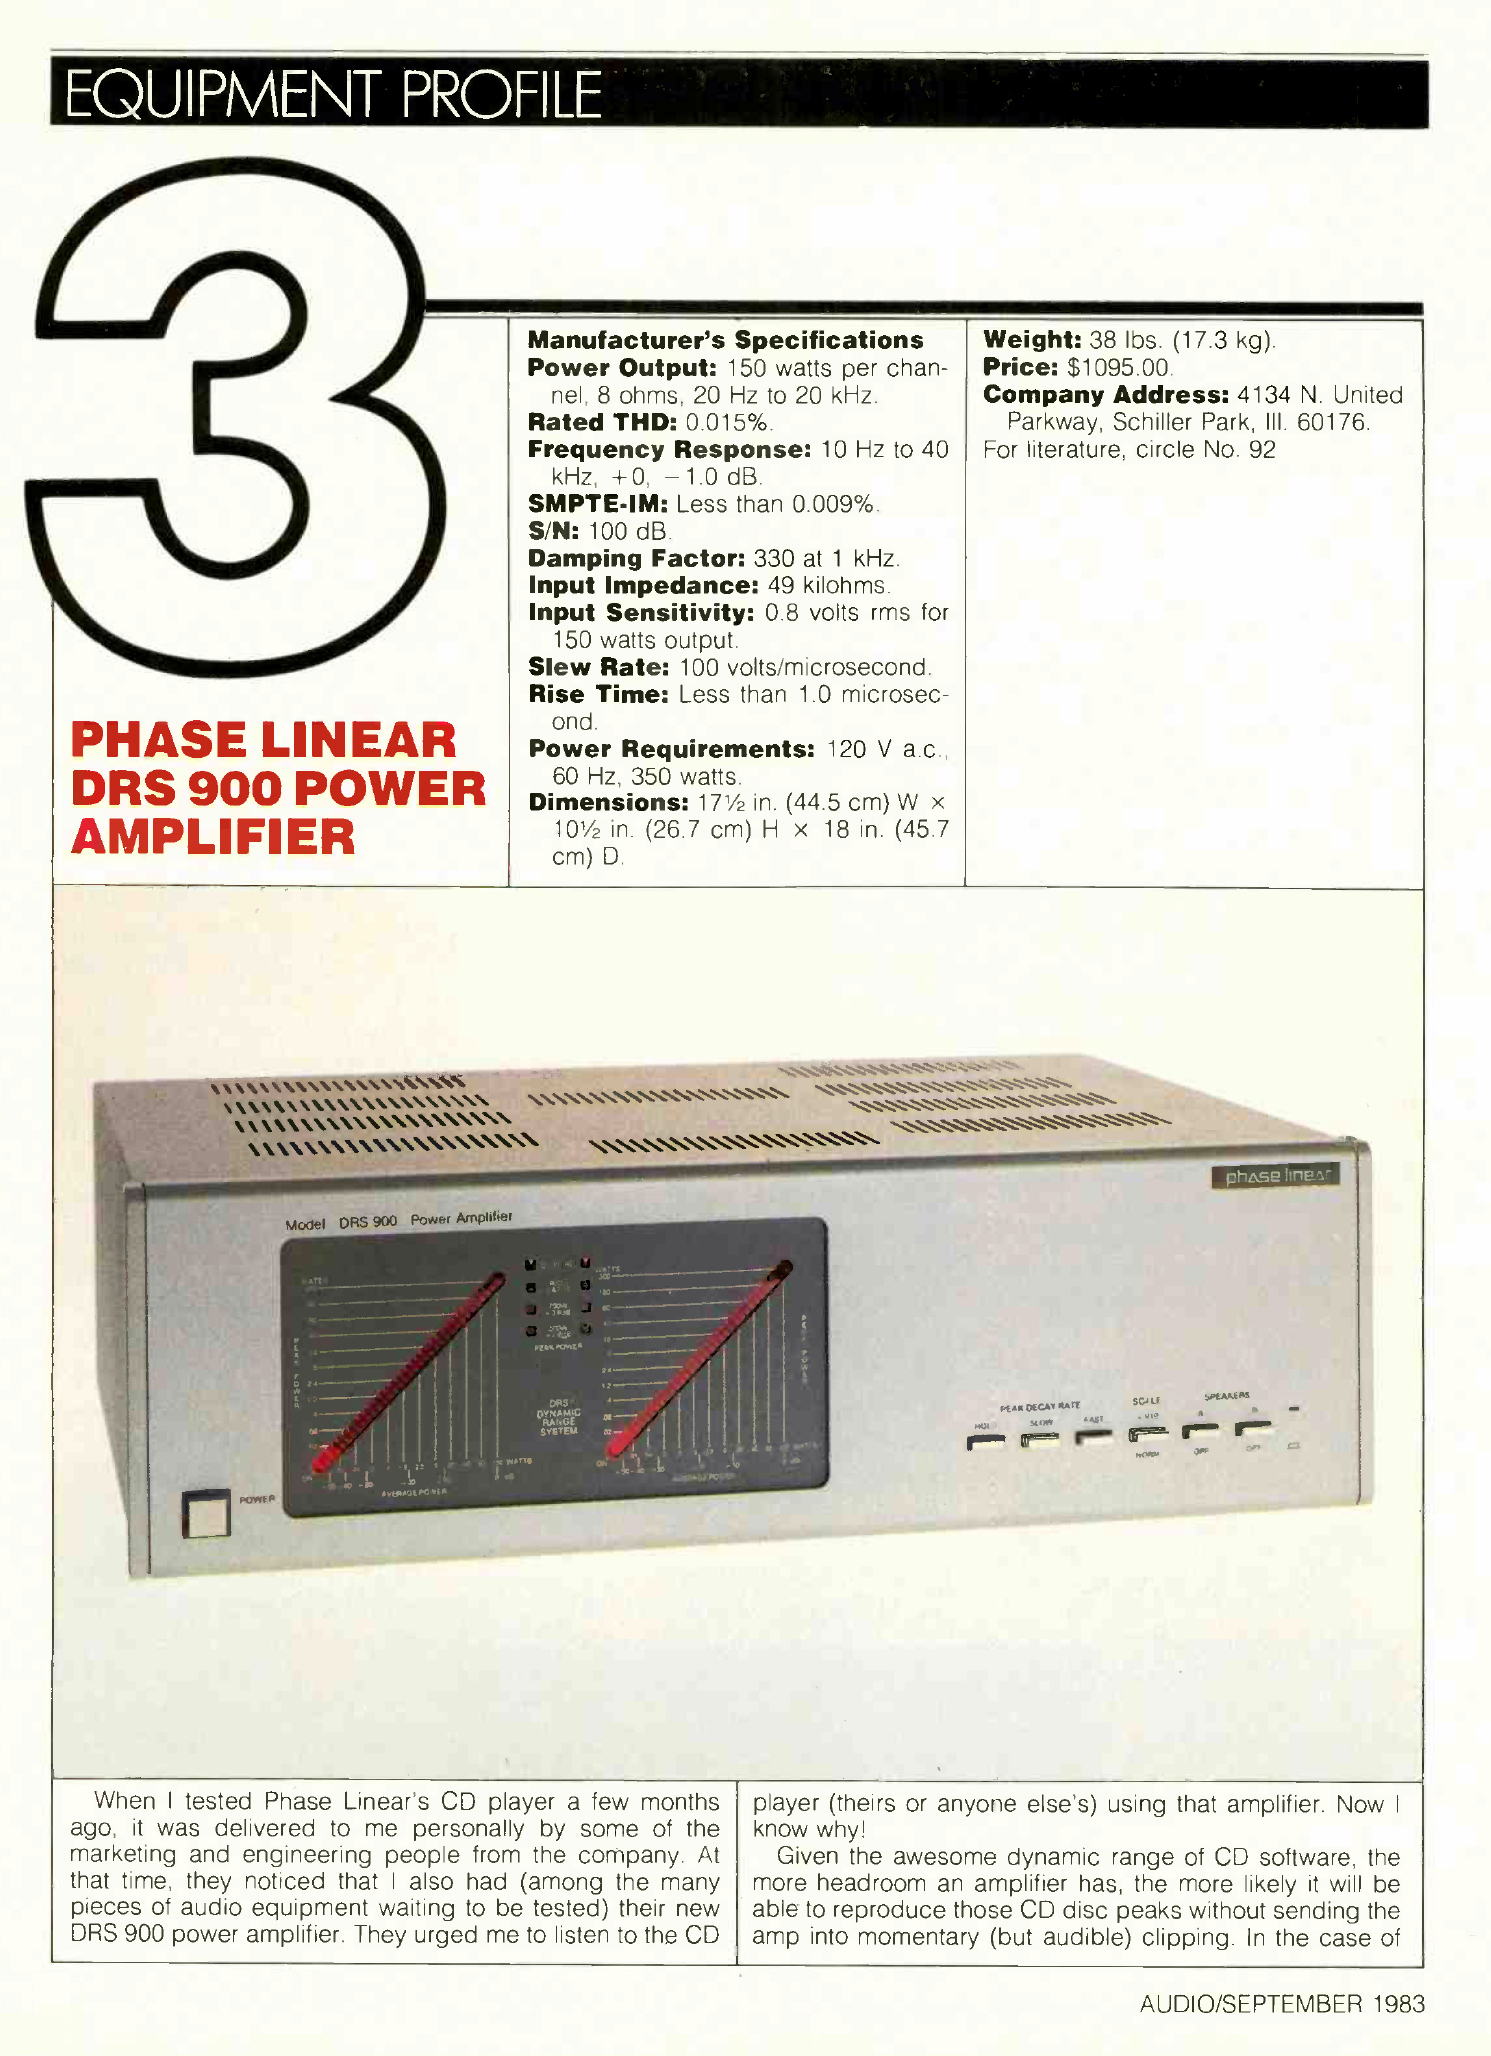 Phase Linear DRS-900-Werbung-1983.jpg